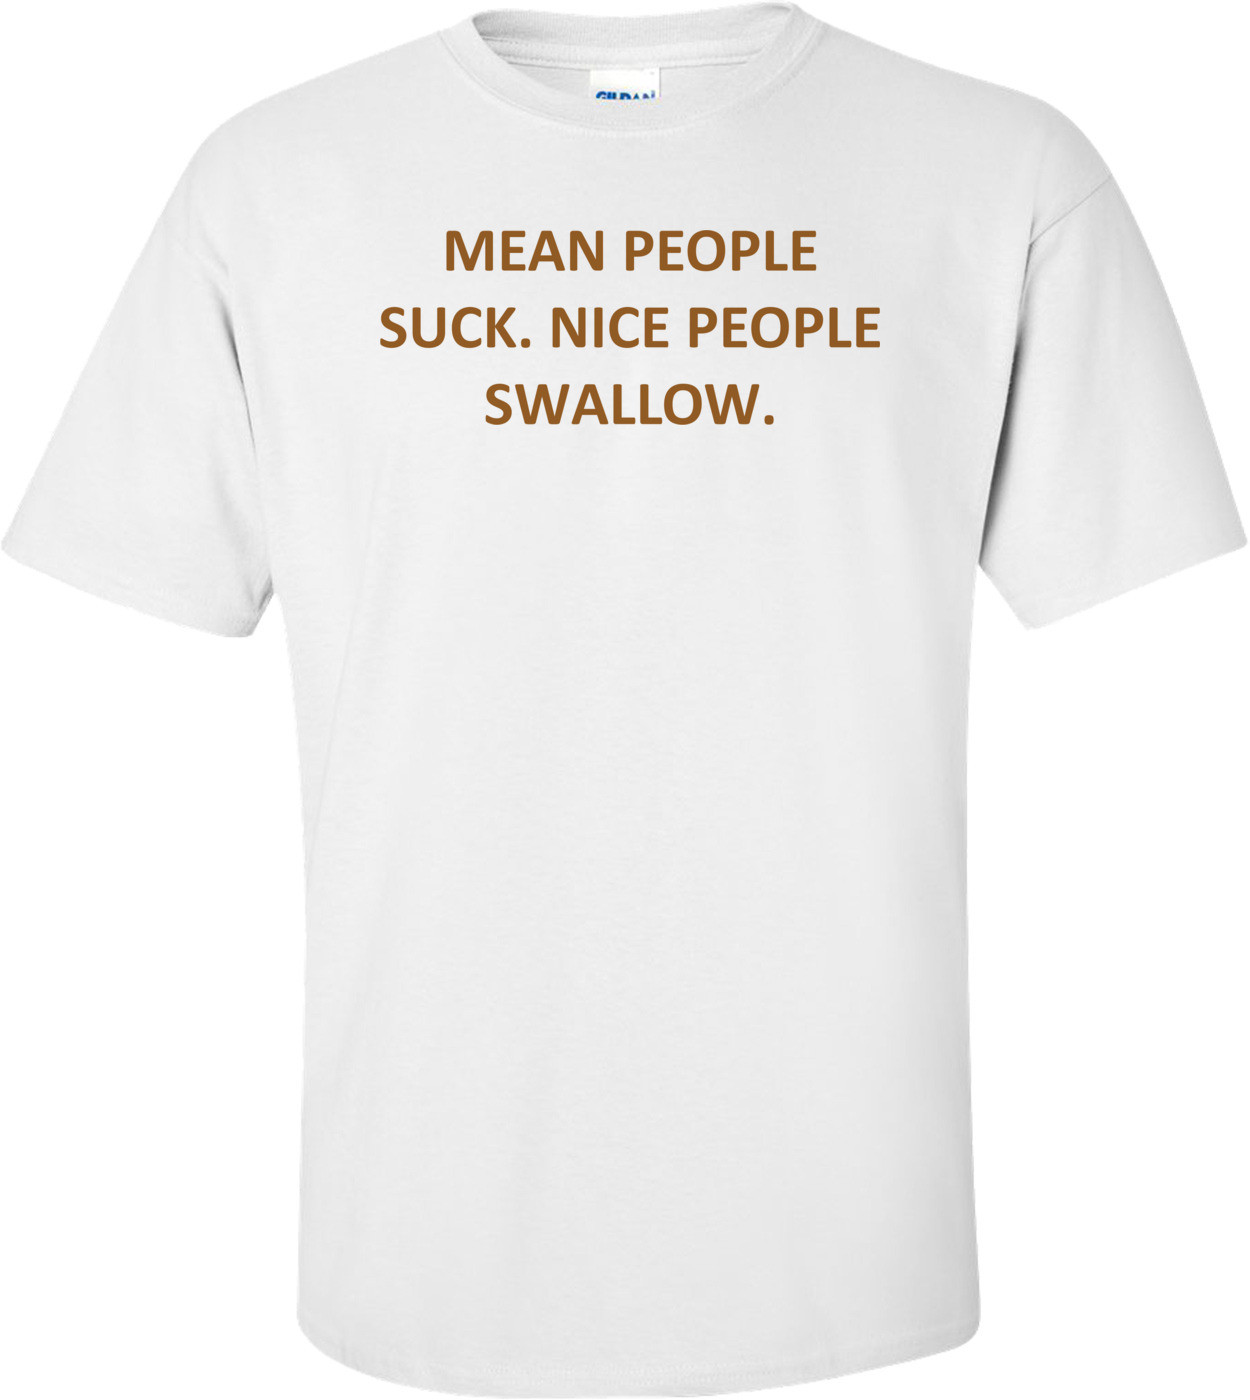 MEAN PEOPLE SUCK. NICE PEOPLE SWALLOW. Shirt